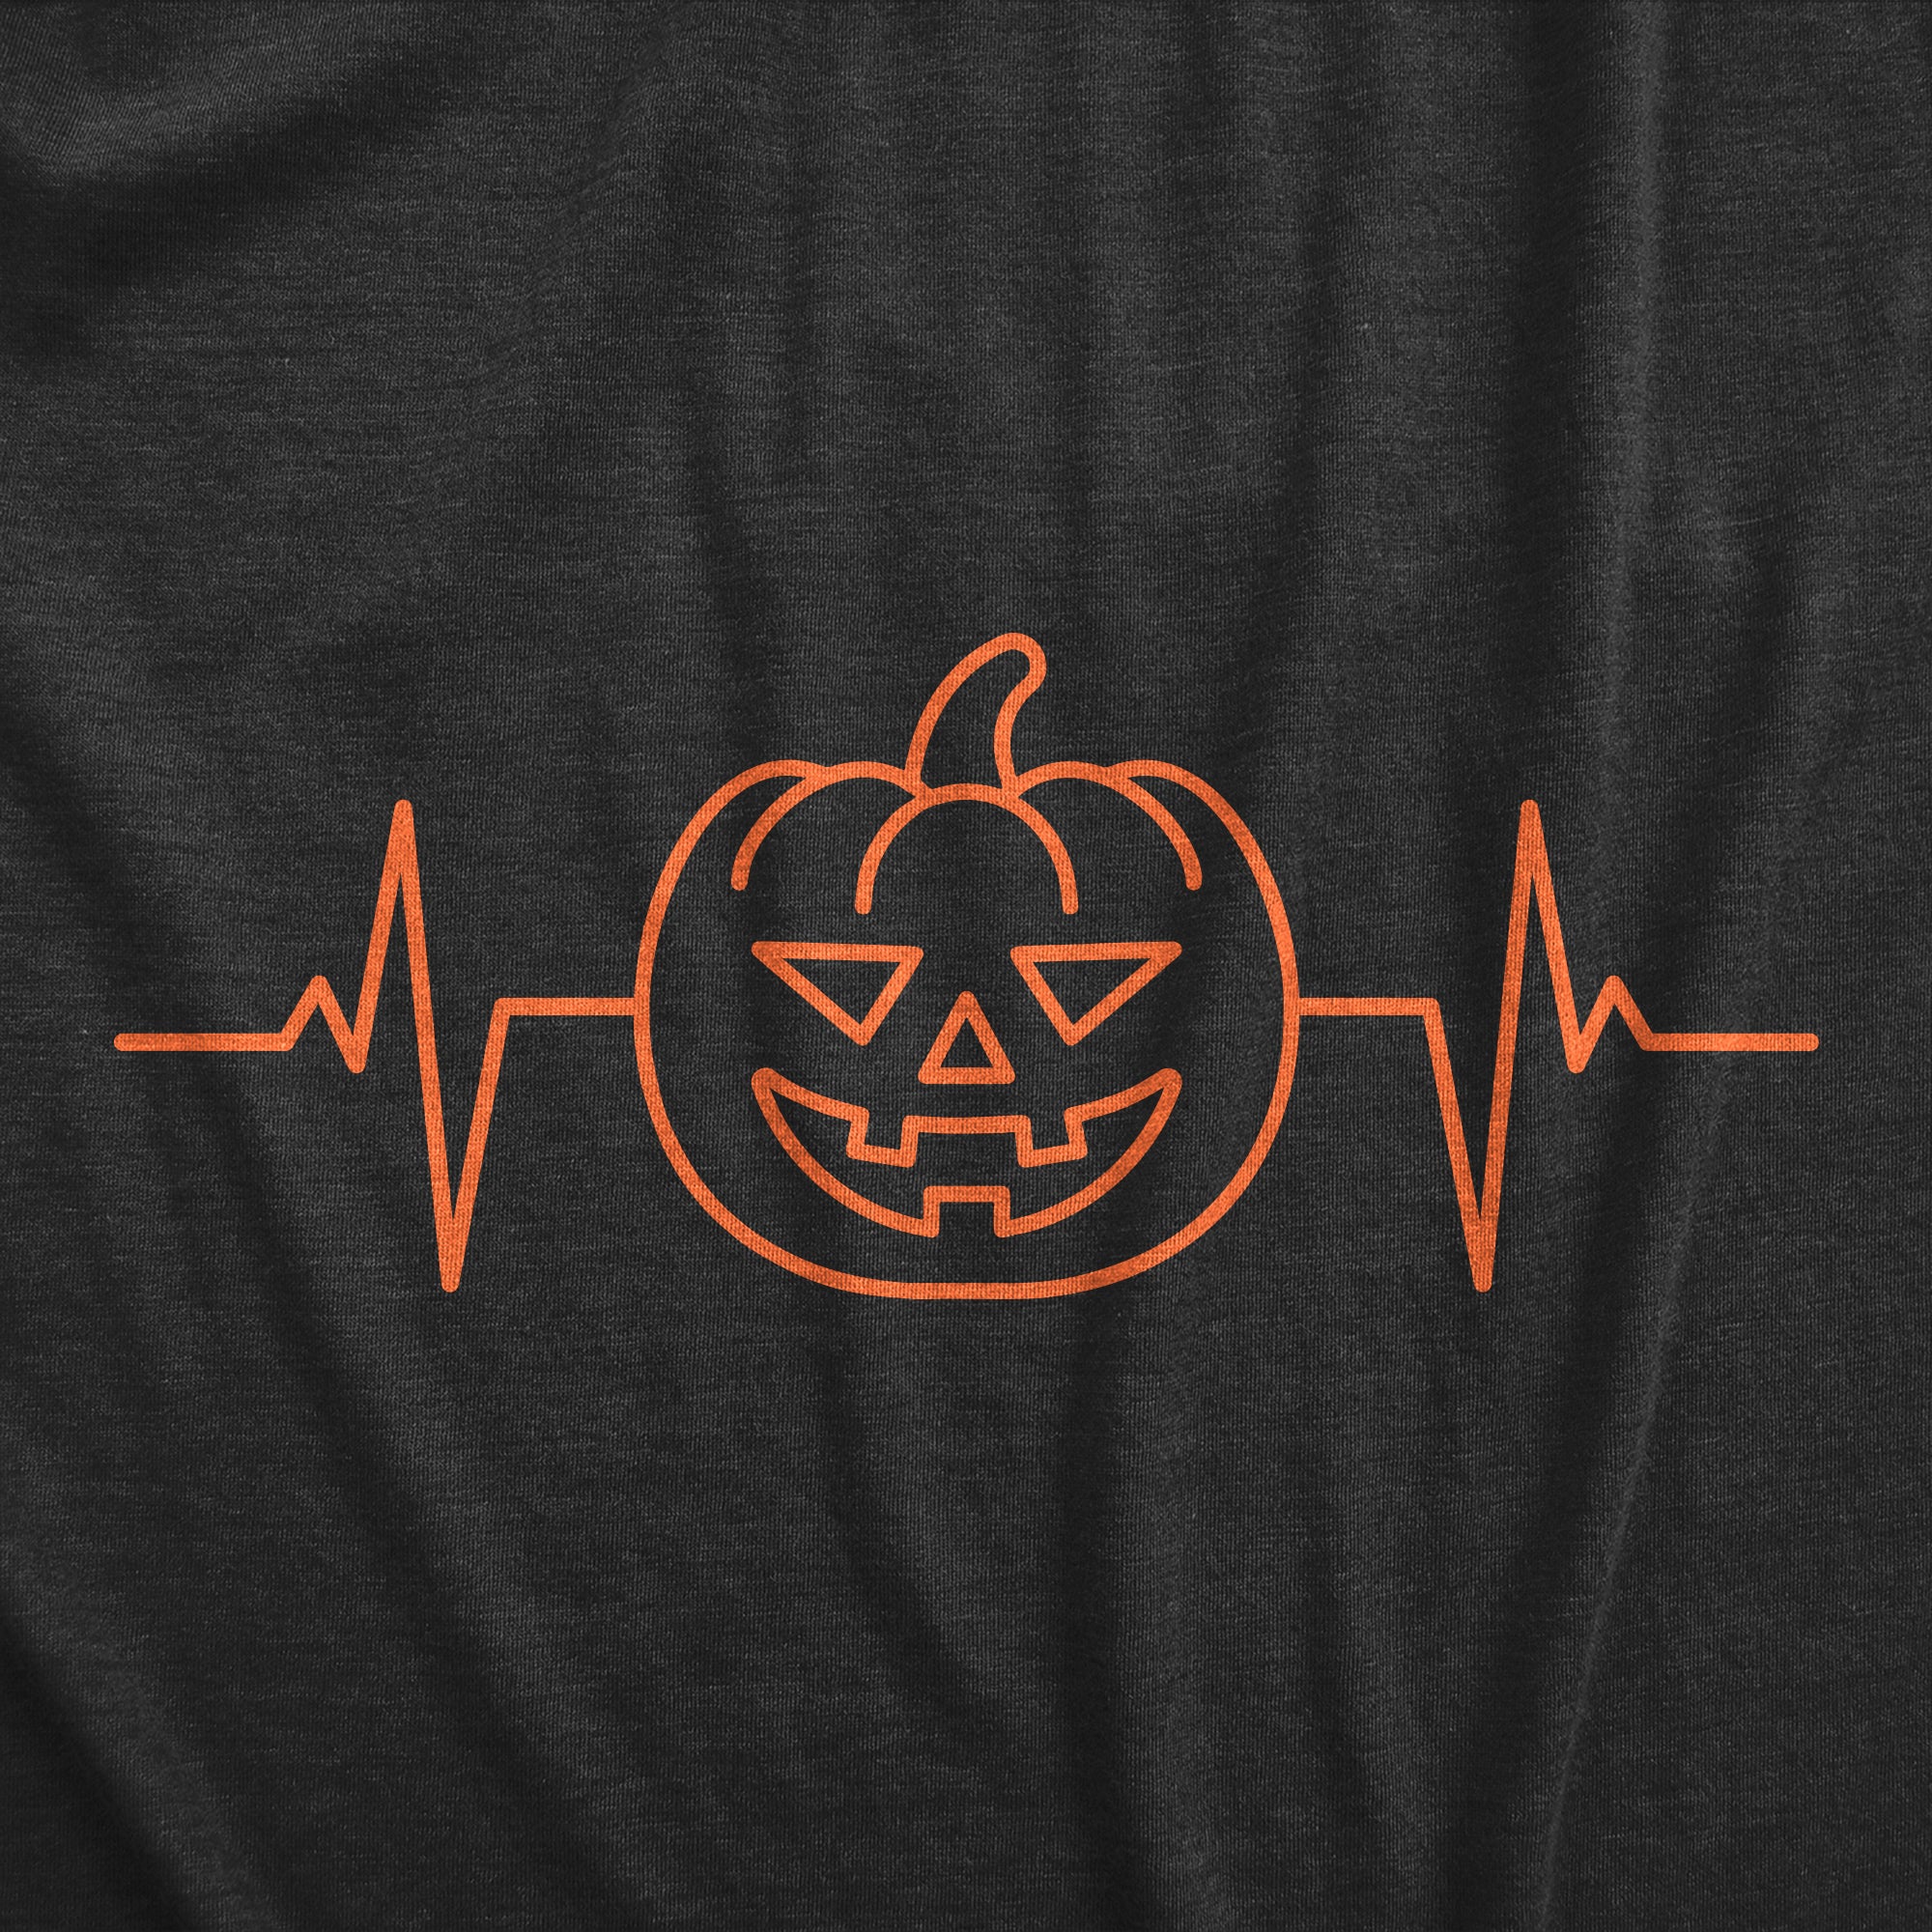 Funny Heather Black Pumpkin Heart Beat Mens T Shirt Nerdy Halloween Sarcastic Tee